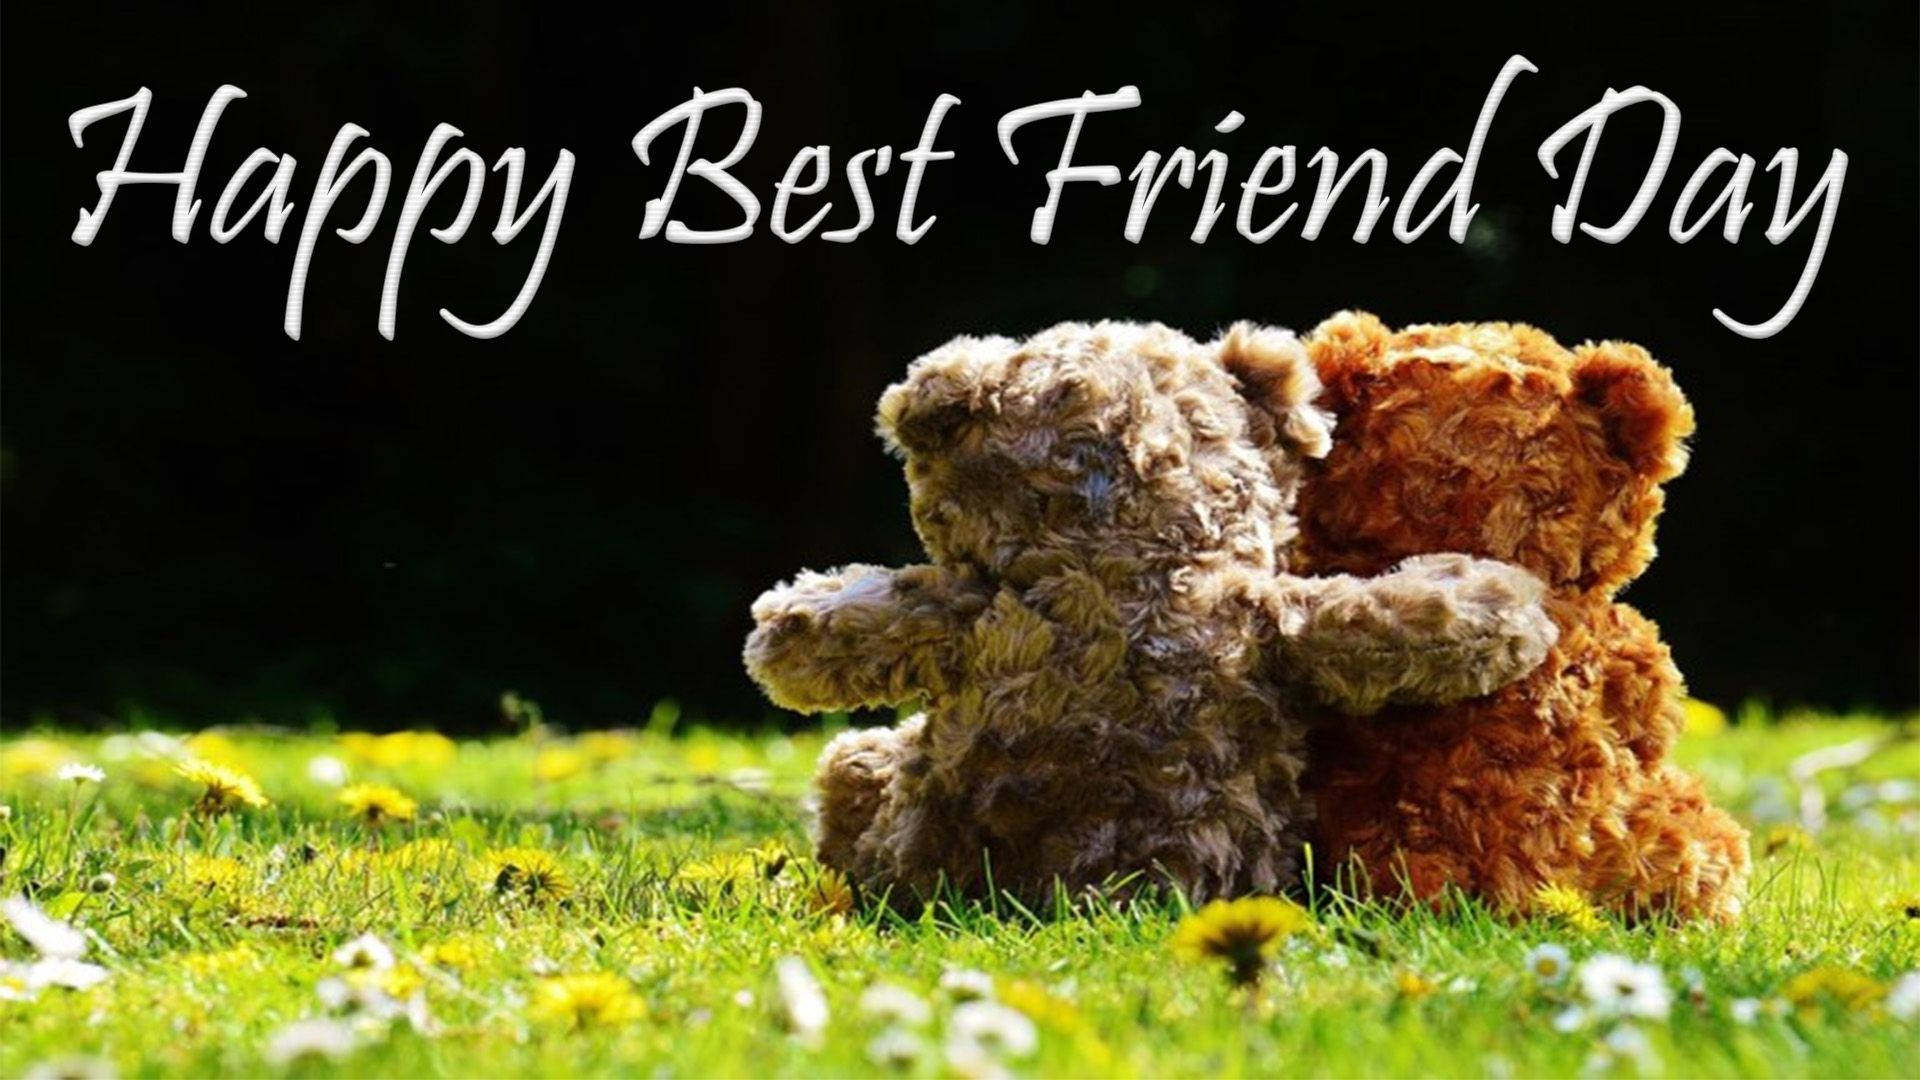 Celebrating Friendship Day With Teddy Bear Hugs